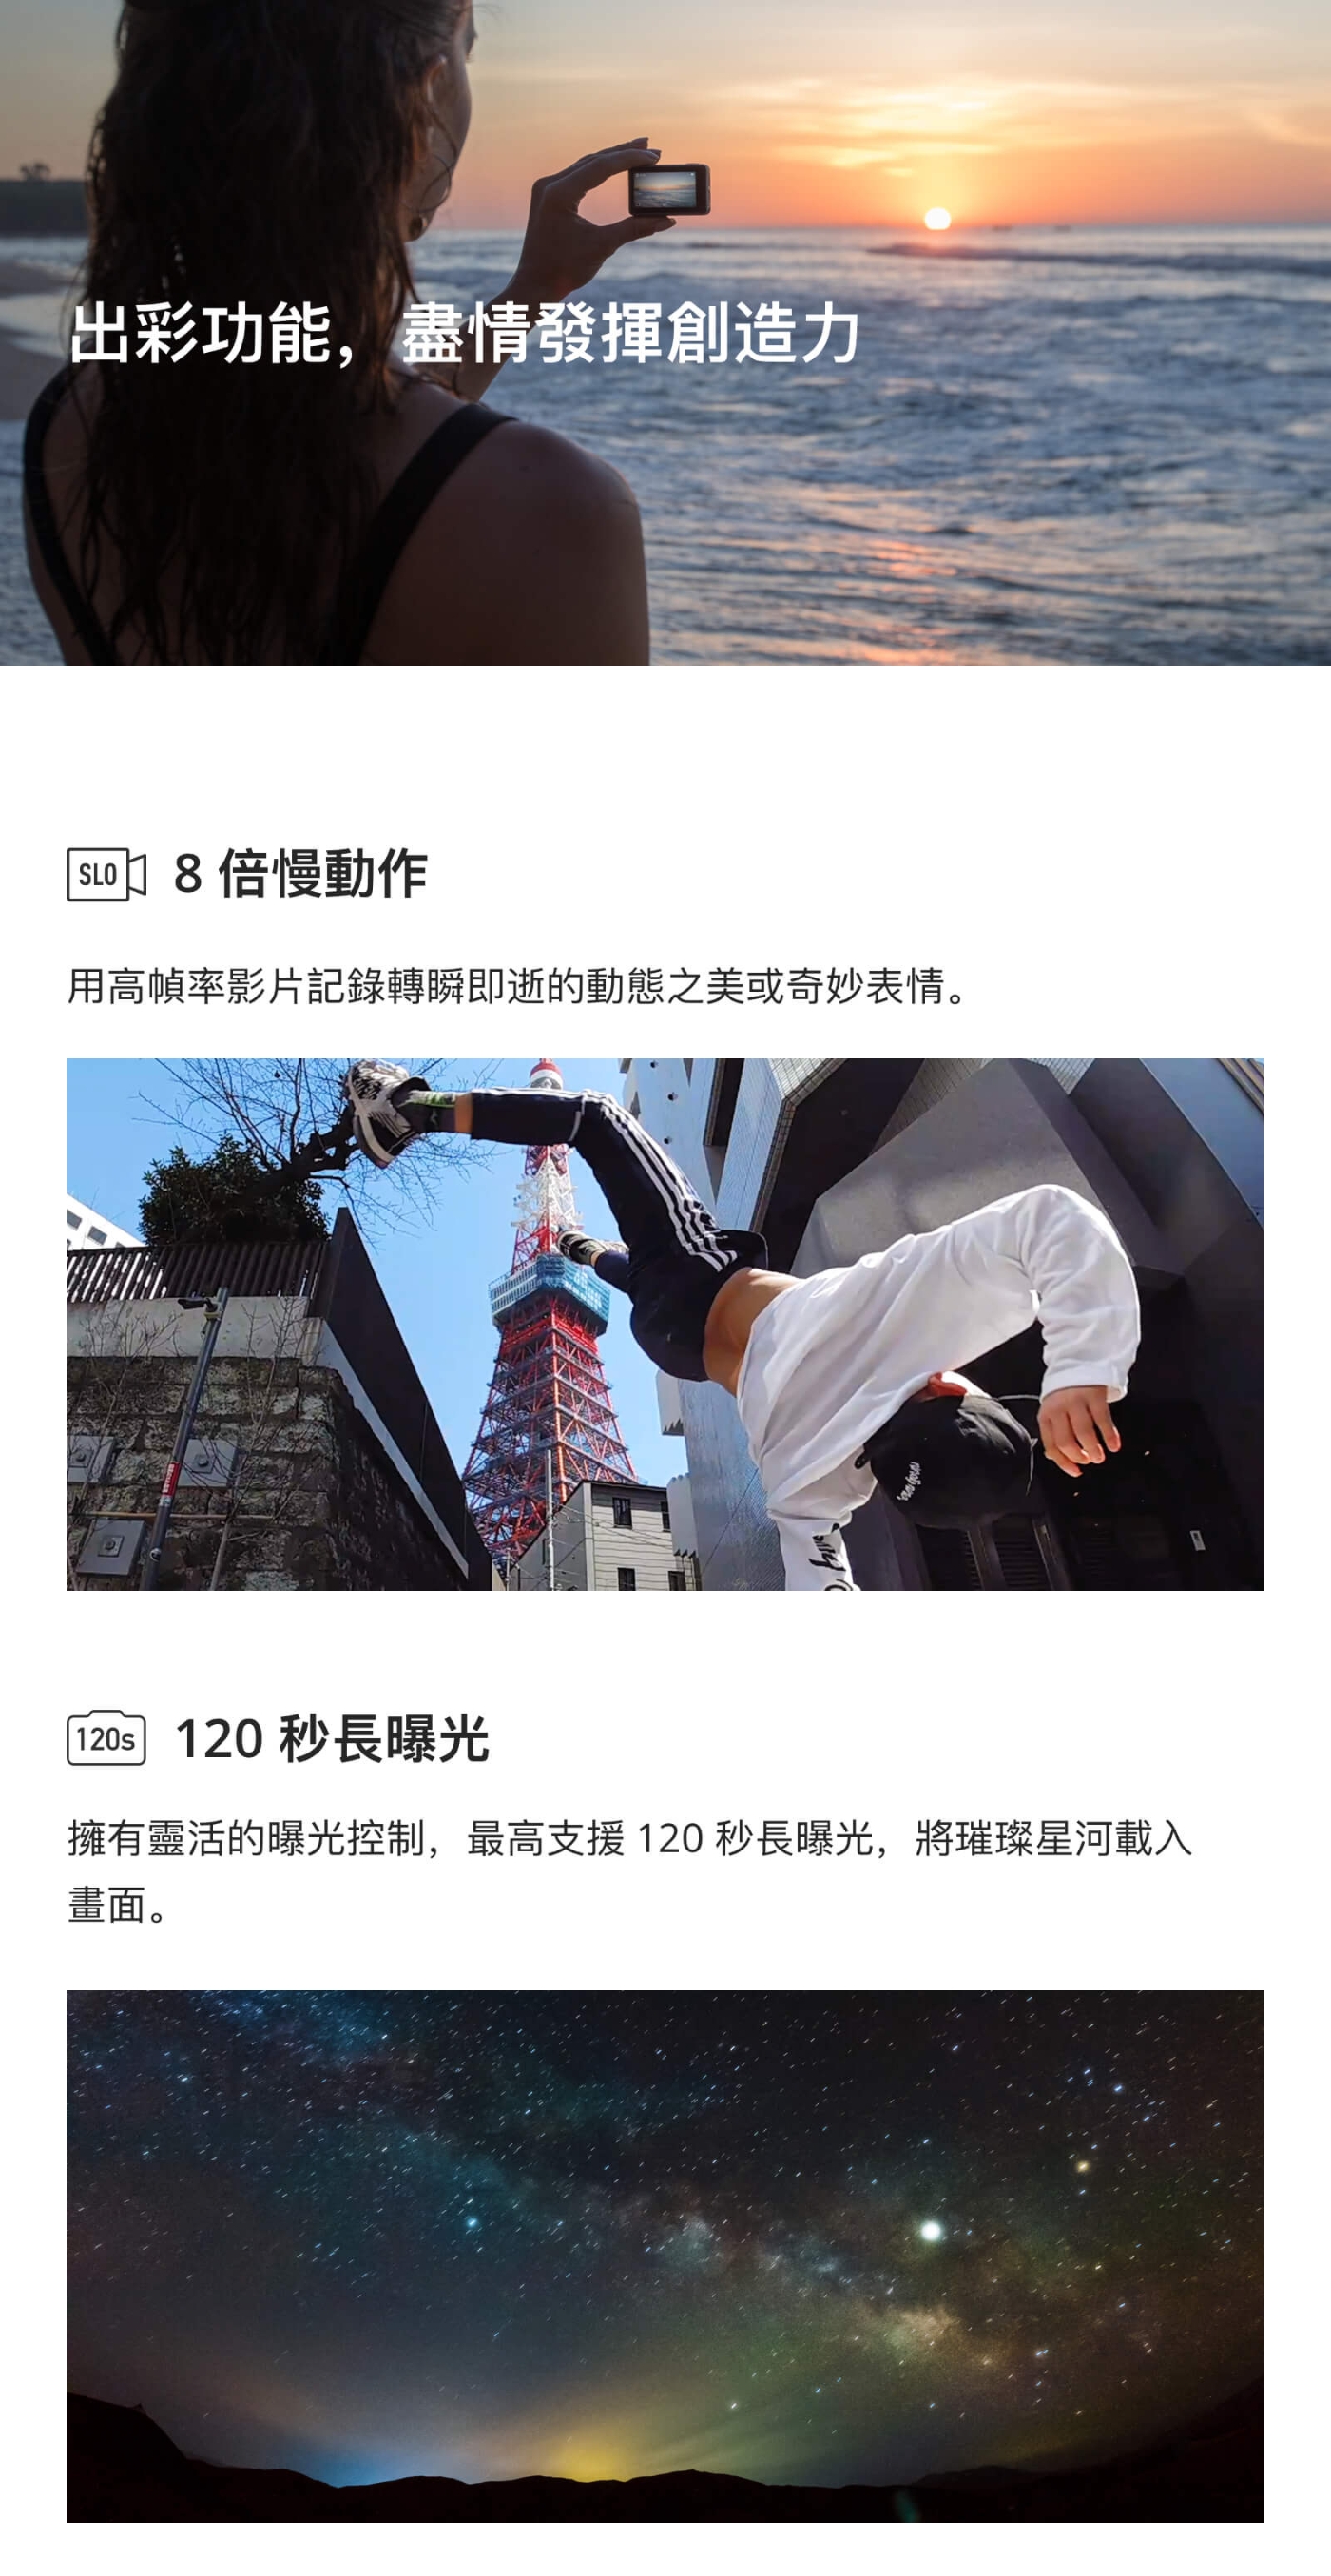 DJI 大疆創新 OSMO Action 運動相機/攝影機 (公司貨)